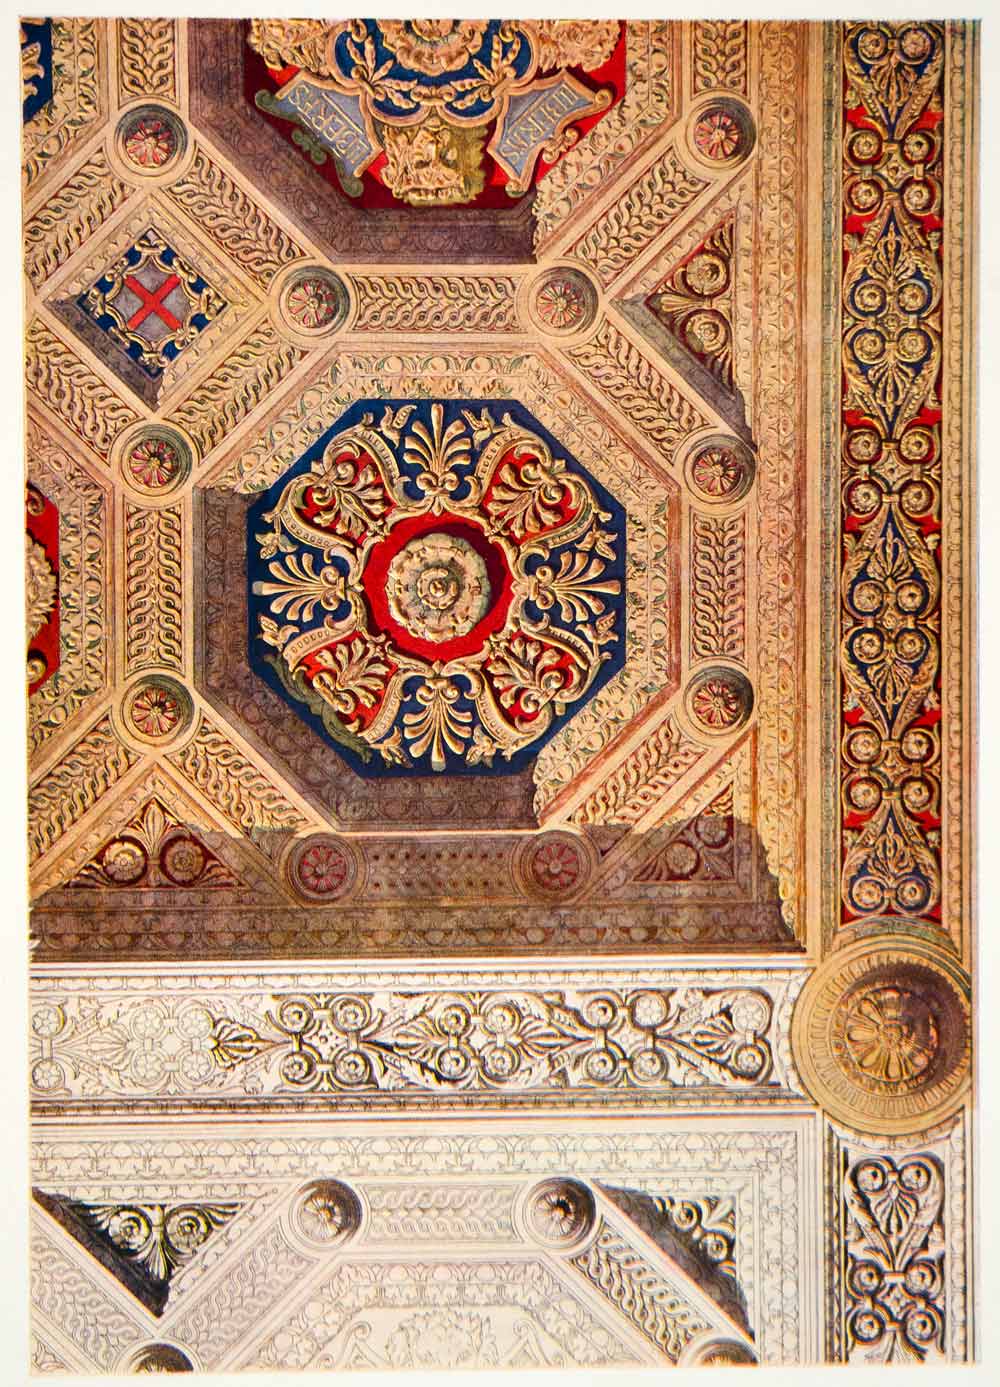 1917 Photolithograph Art Nouveau Ceiling Interior Design Giulio Casanova MDA5